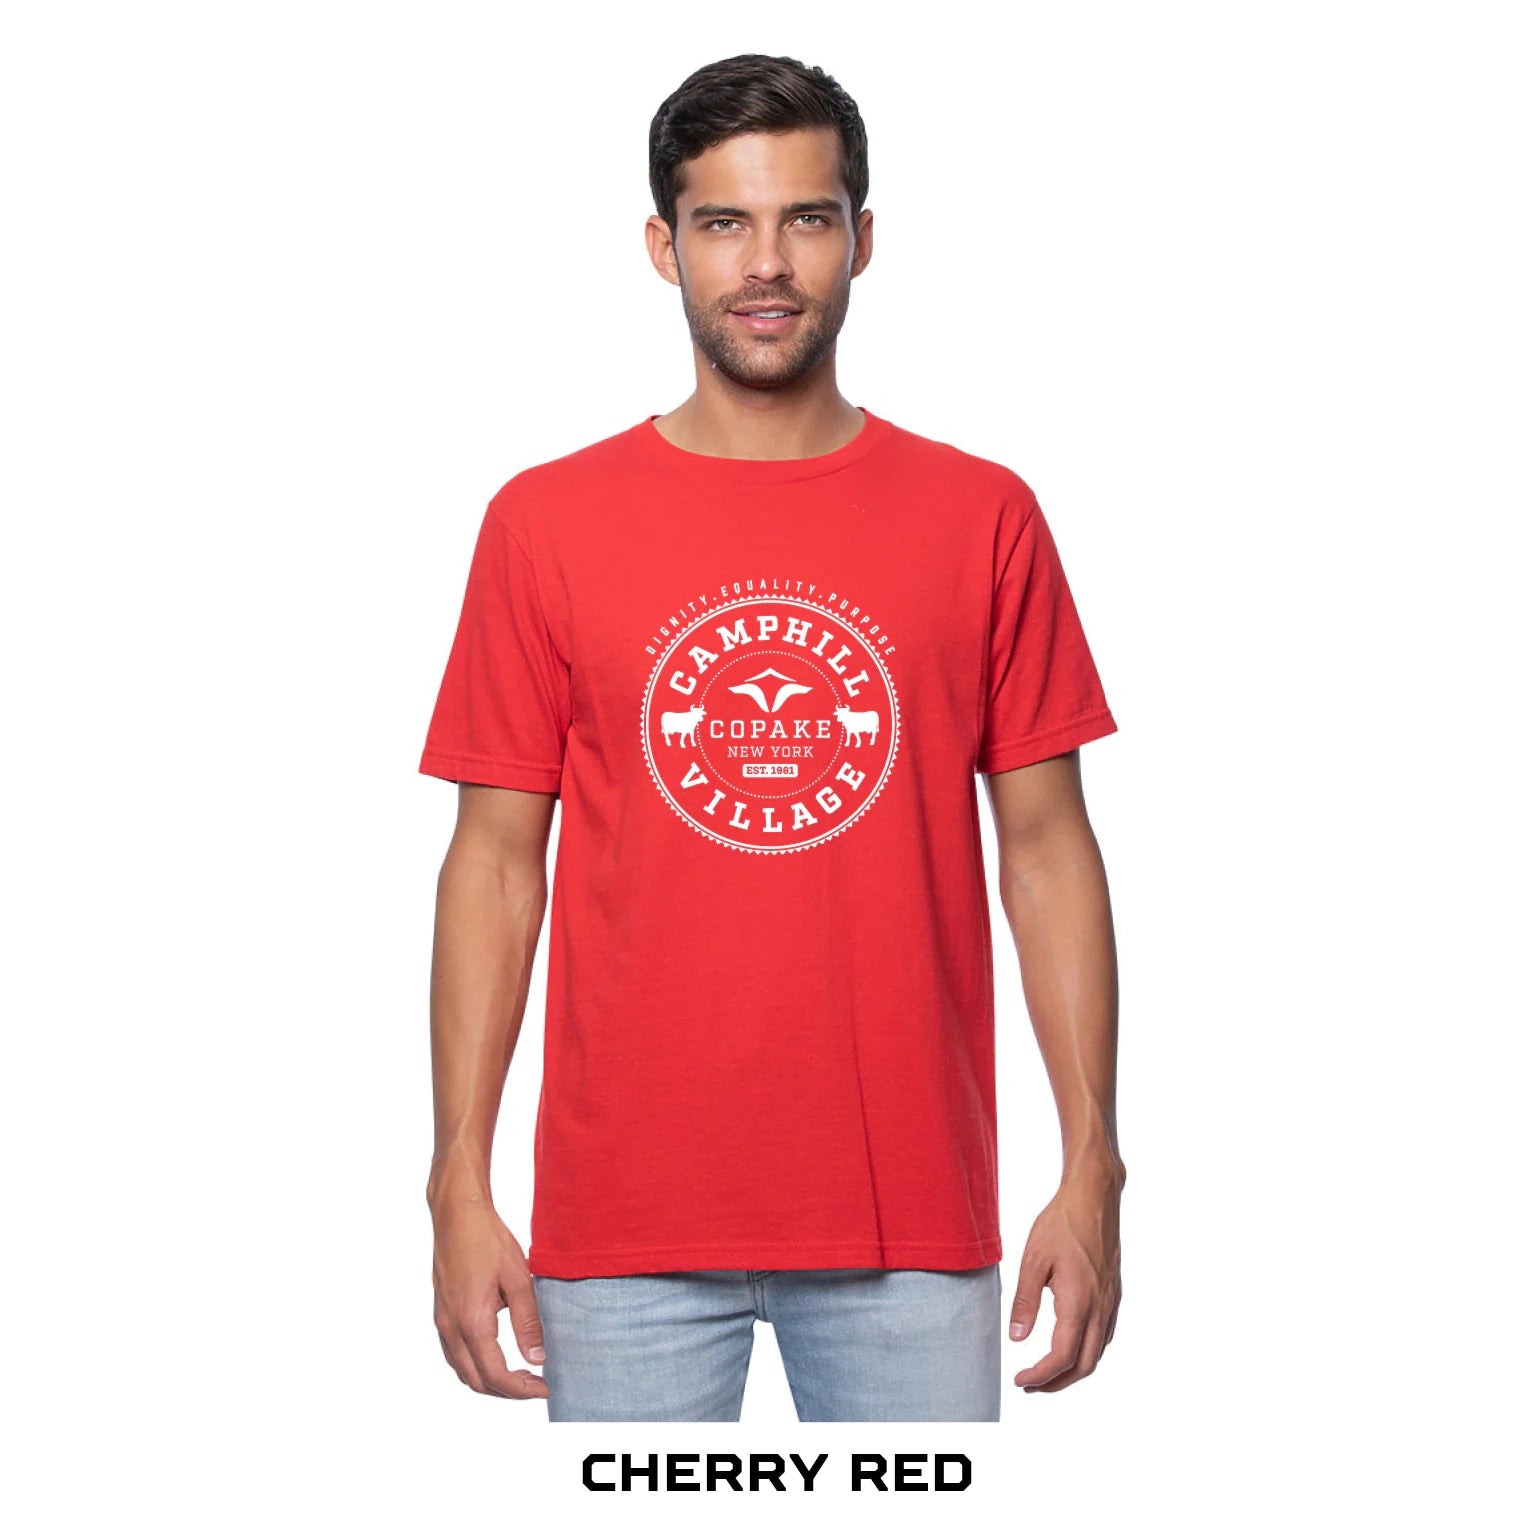 Village CV Round Store Emblem | Camphill Village Design: - | Cherry Red Camphill T-shirt Store